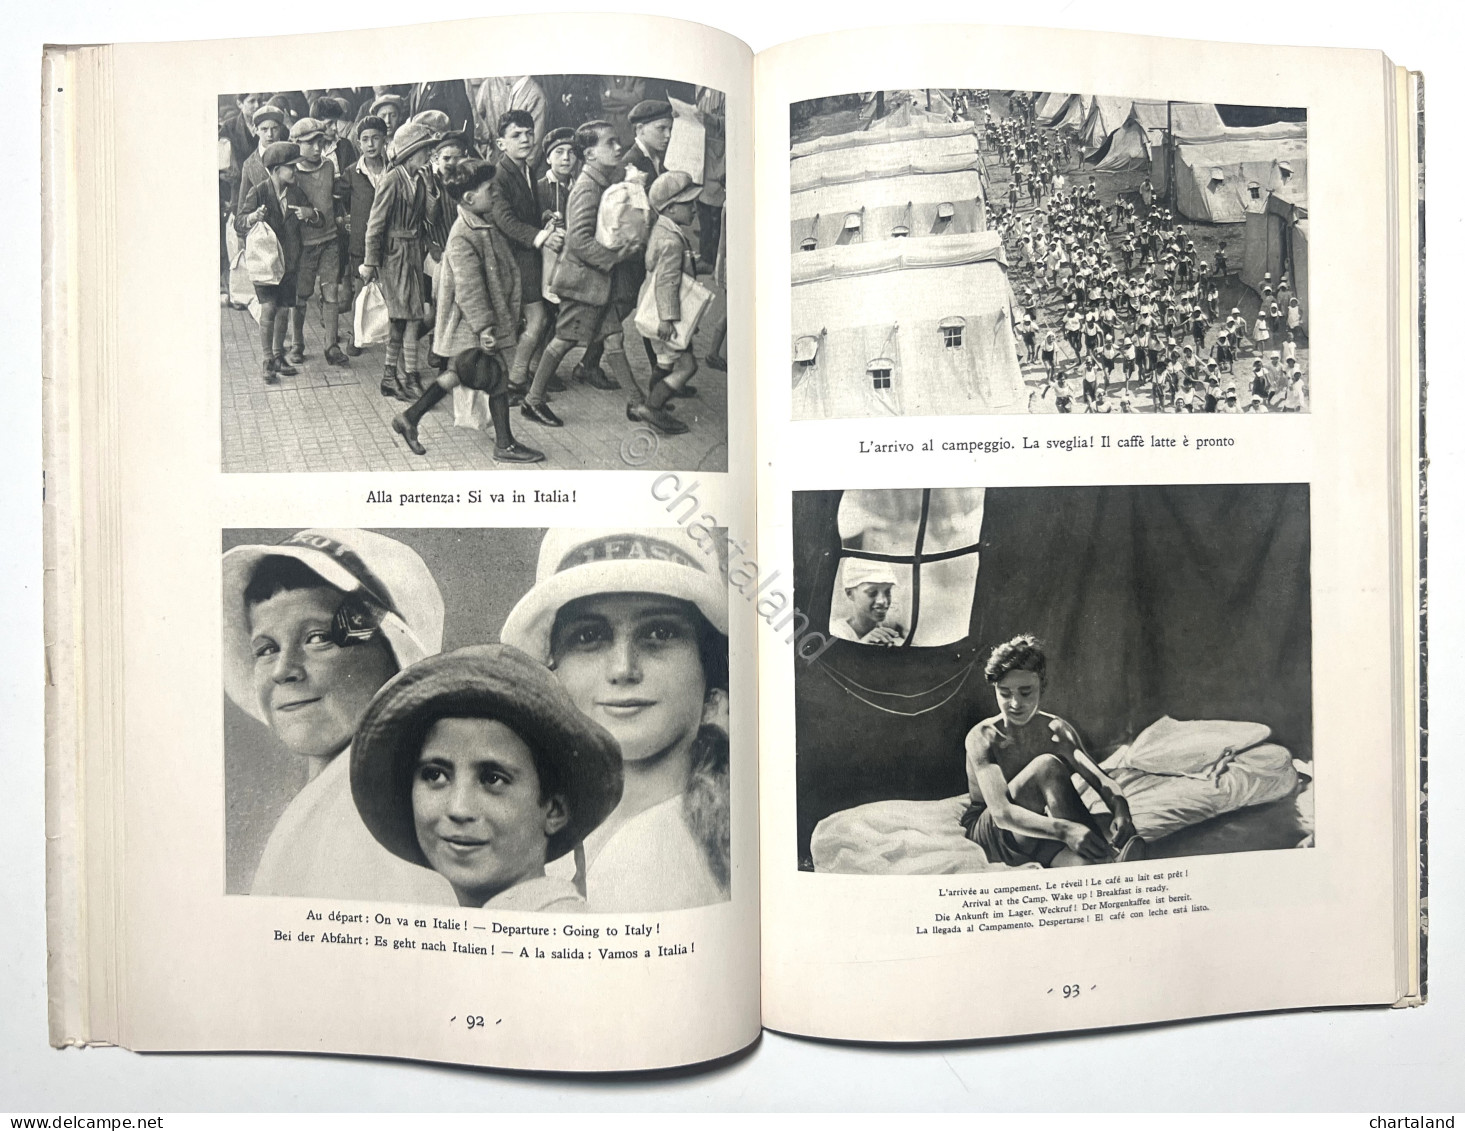 Istituto Nazionale L.U.C.E. - L'Italia Fascista In Cammino - Ed. 1932 - Sonstige & Ohne Zuordnung